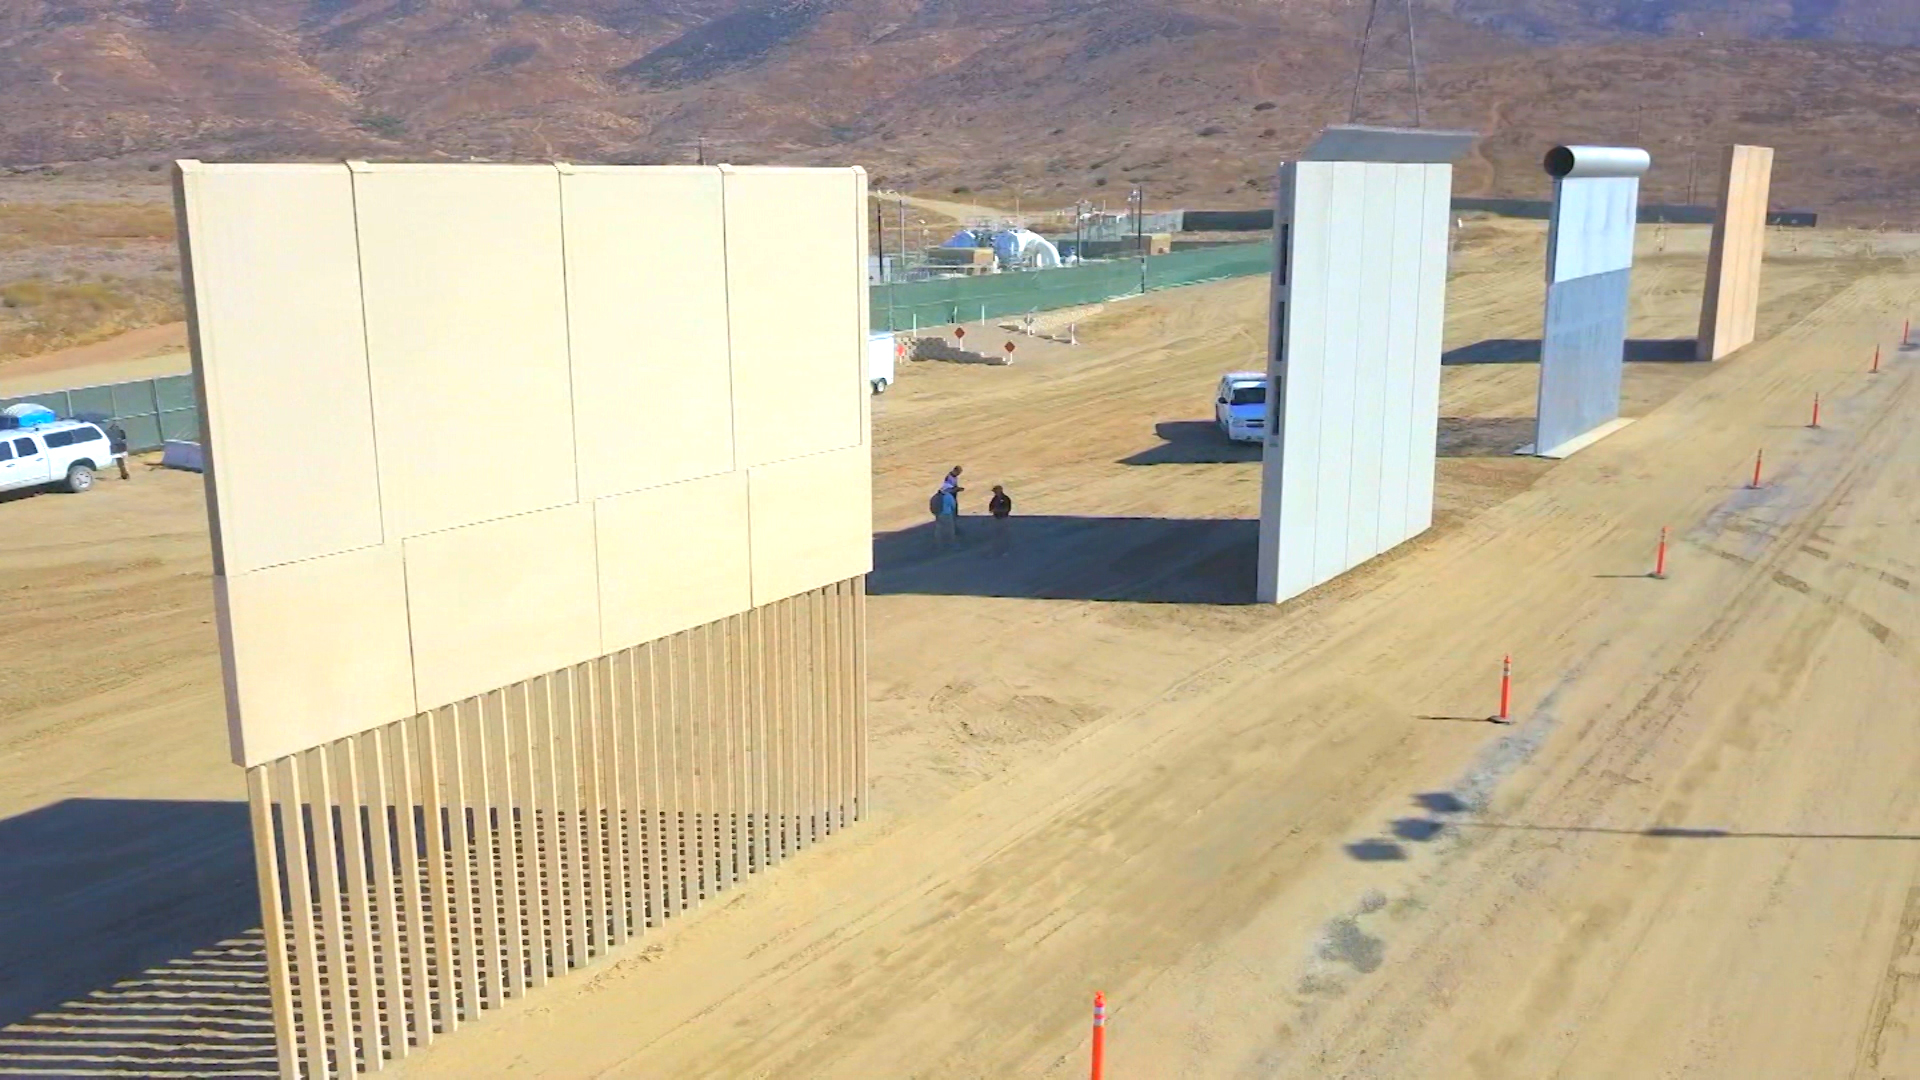 8 border wall prototypes on display - CNN Video